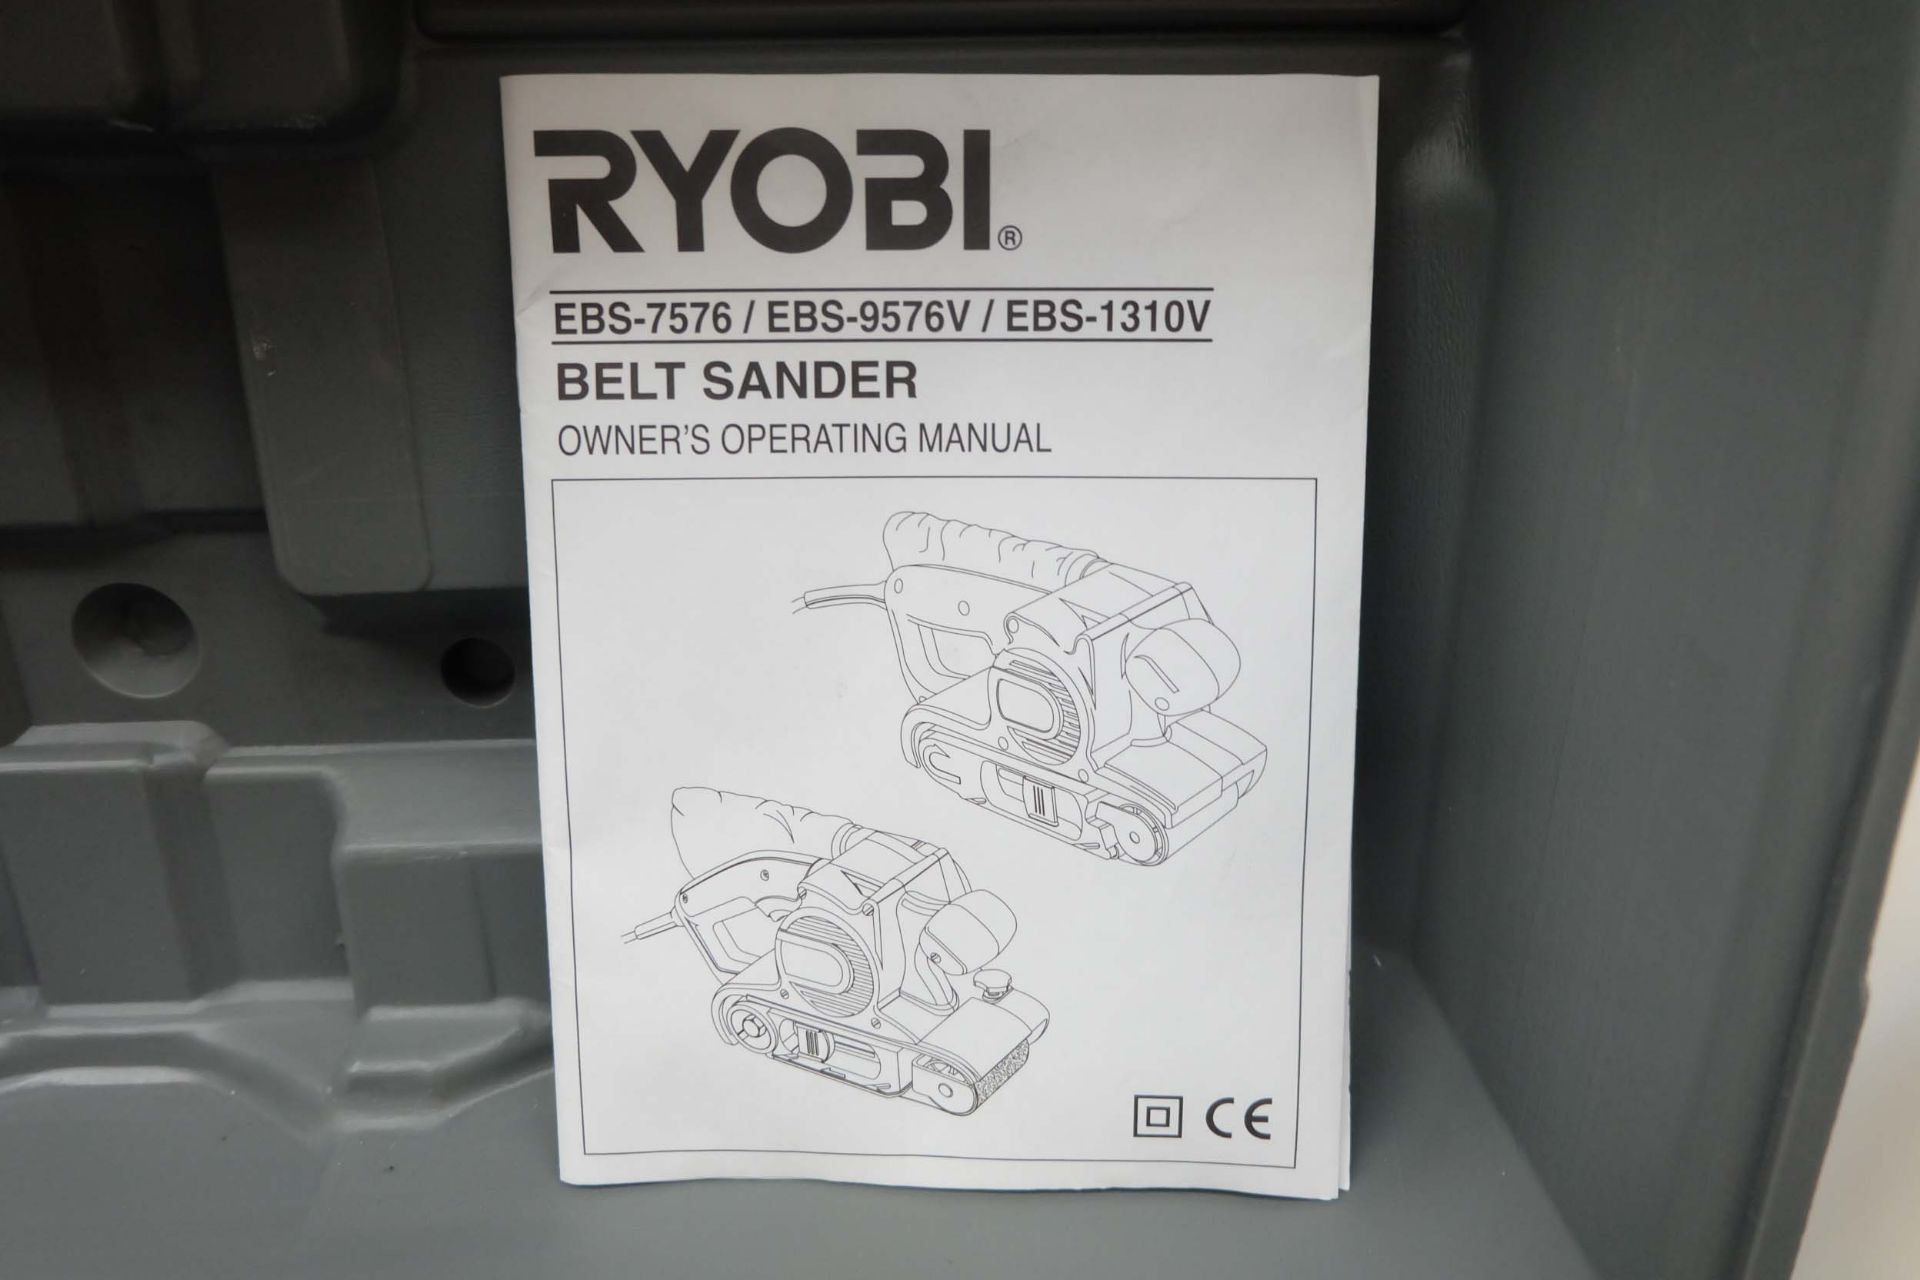 Ryobi Model EBS-1310V Electric Belt Sander. Input 110 Volt. Power 1350 Watt. Load speed 240-400m/min - Image 7 of 9